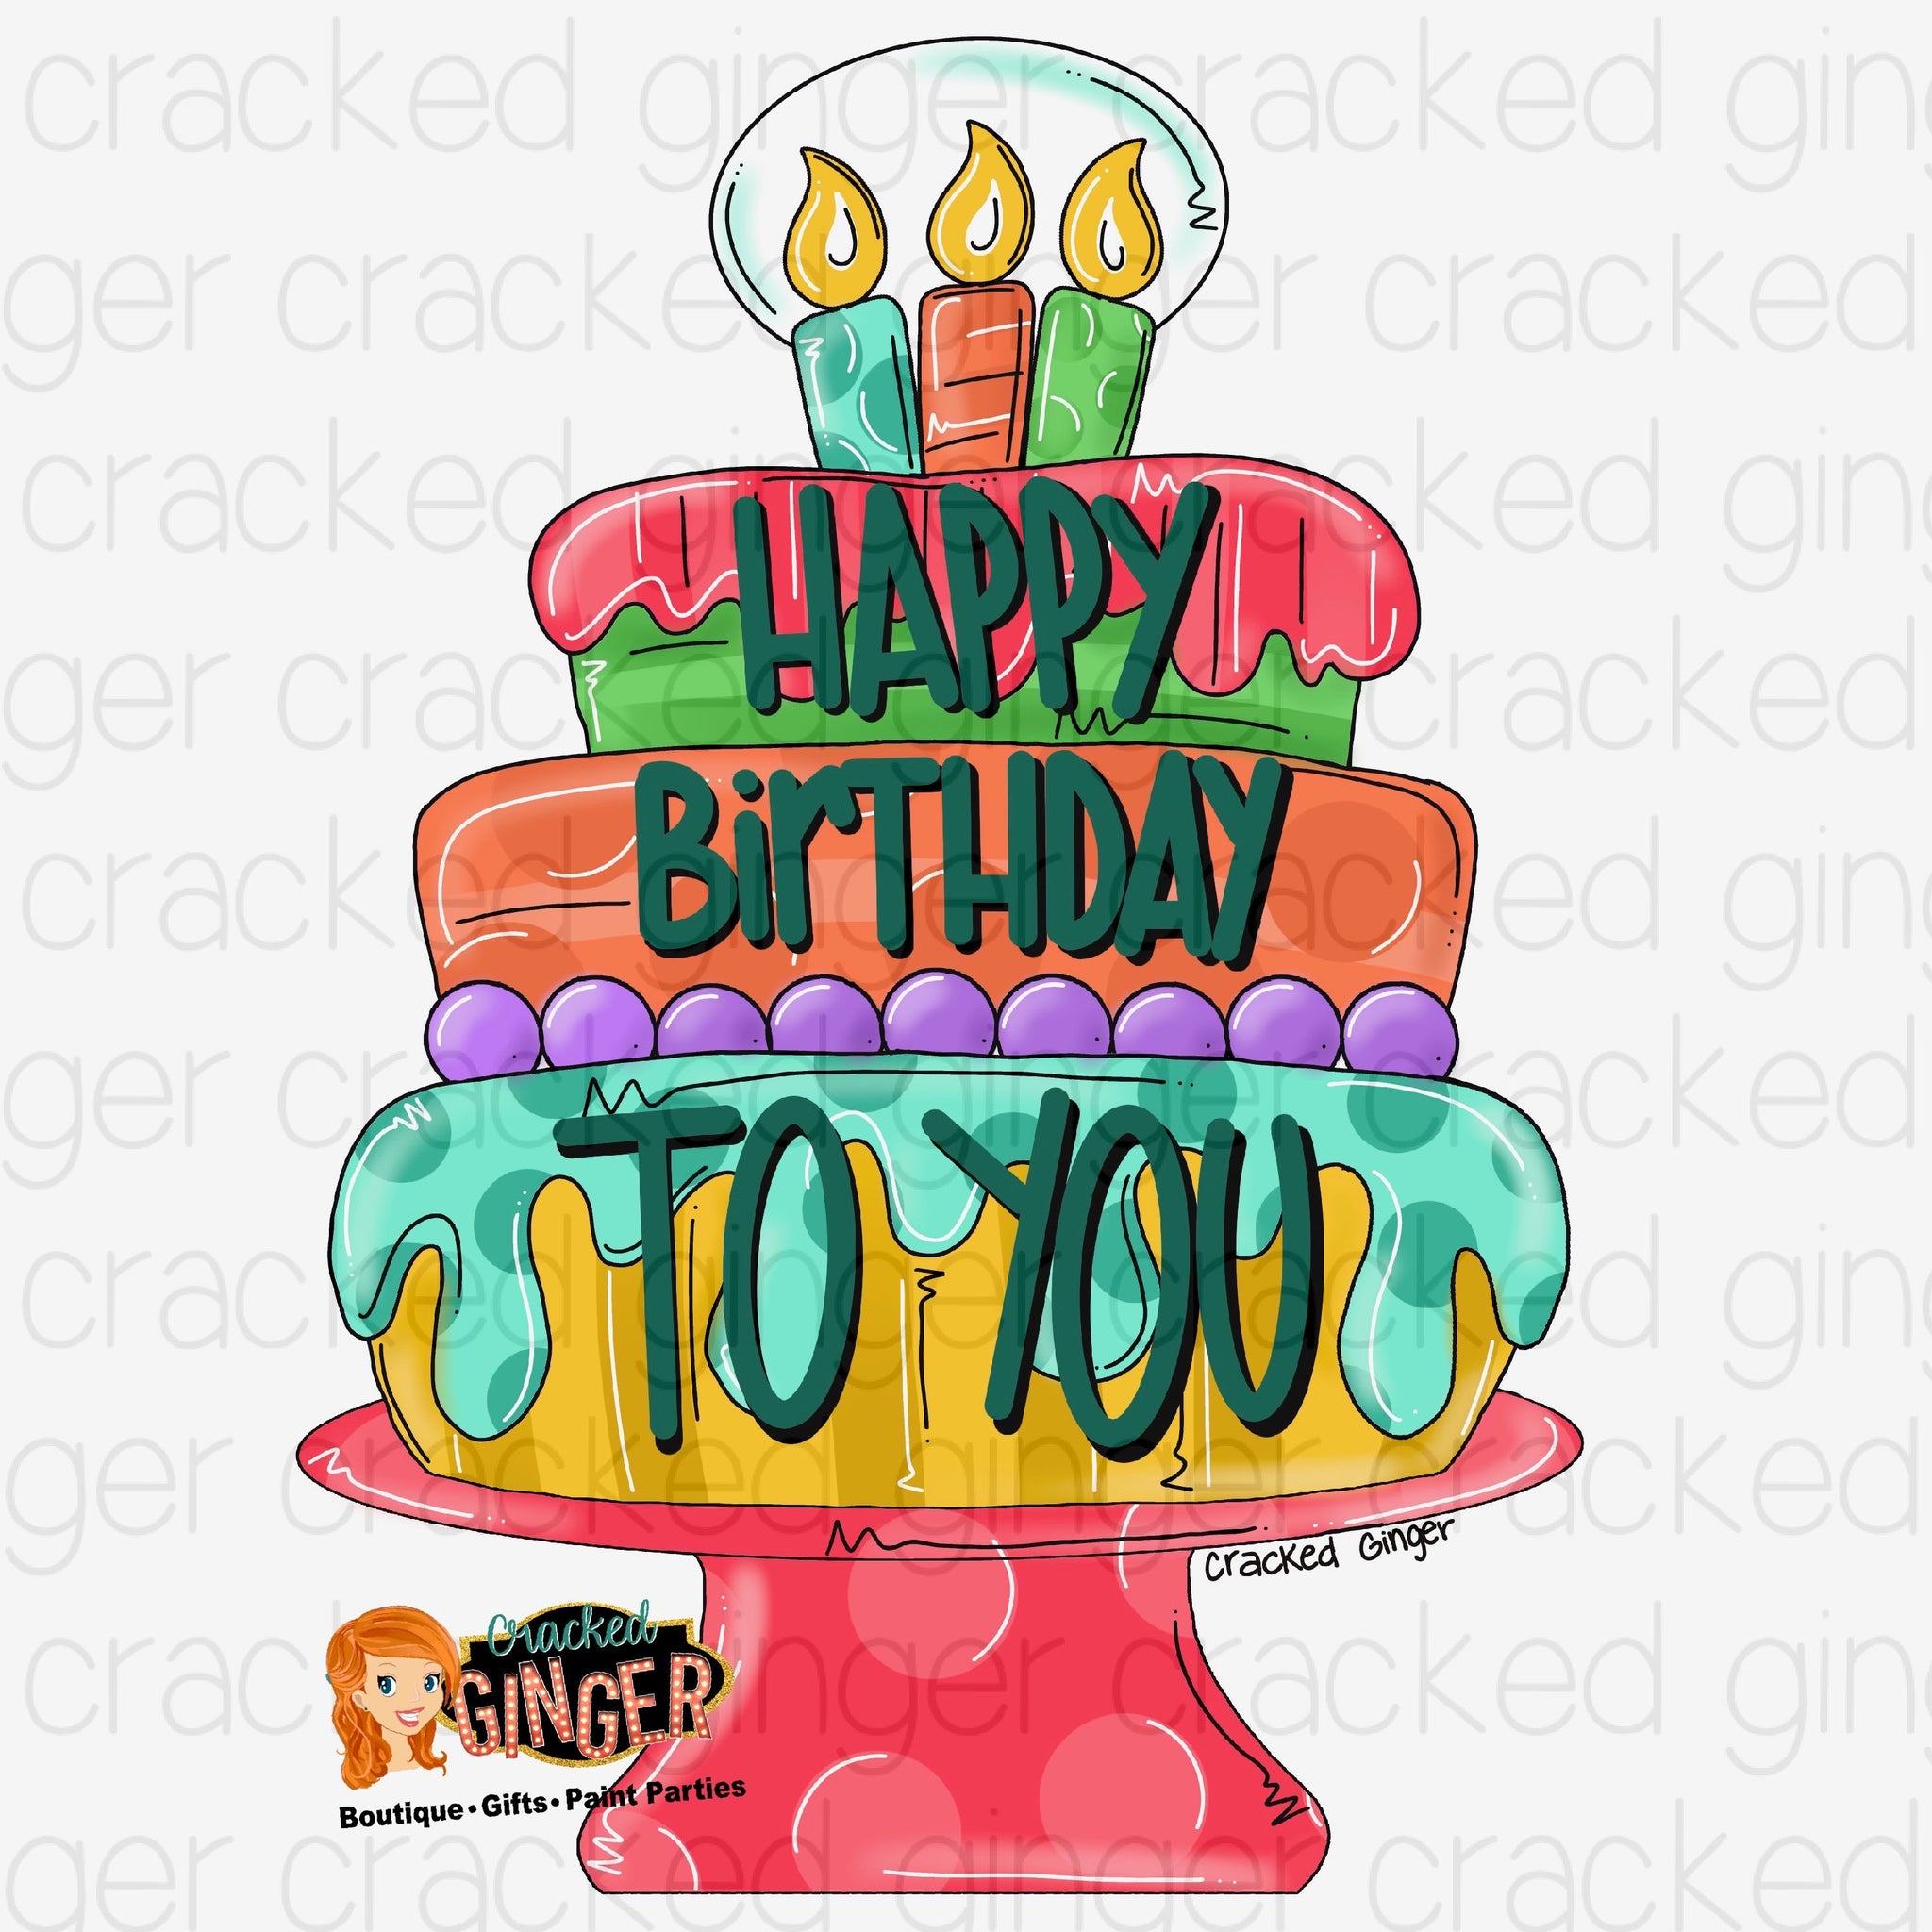 Birthday cake icon vector design template - Stock Image - Everypixel